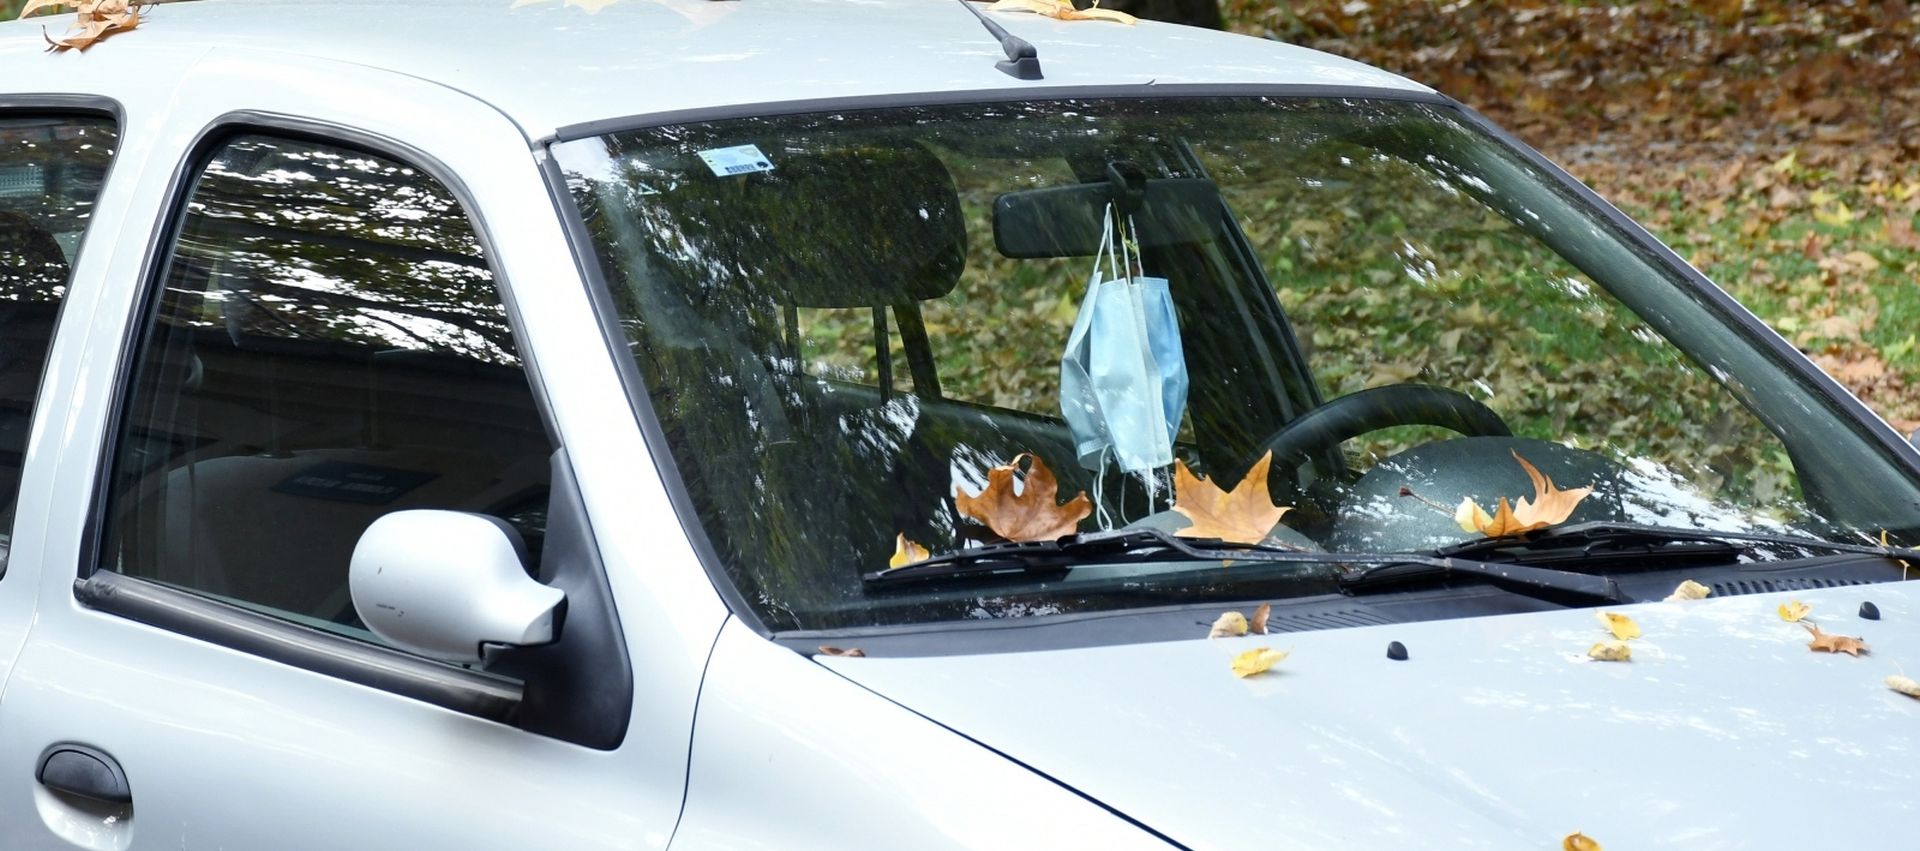 03.11.2020., Sisak - S drveca pada lisce na parkirane automobile. 
Photo: Nikola Cutuk/PIXSELL